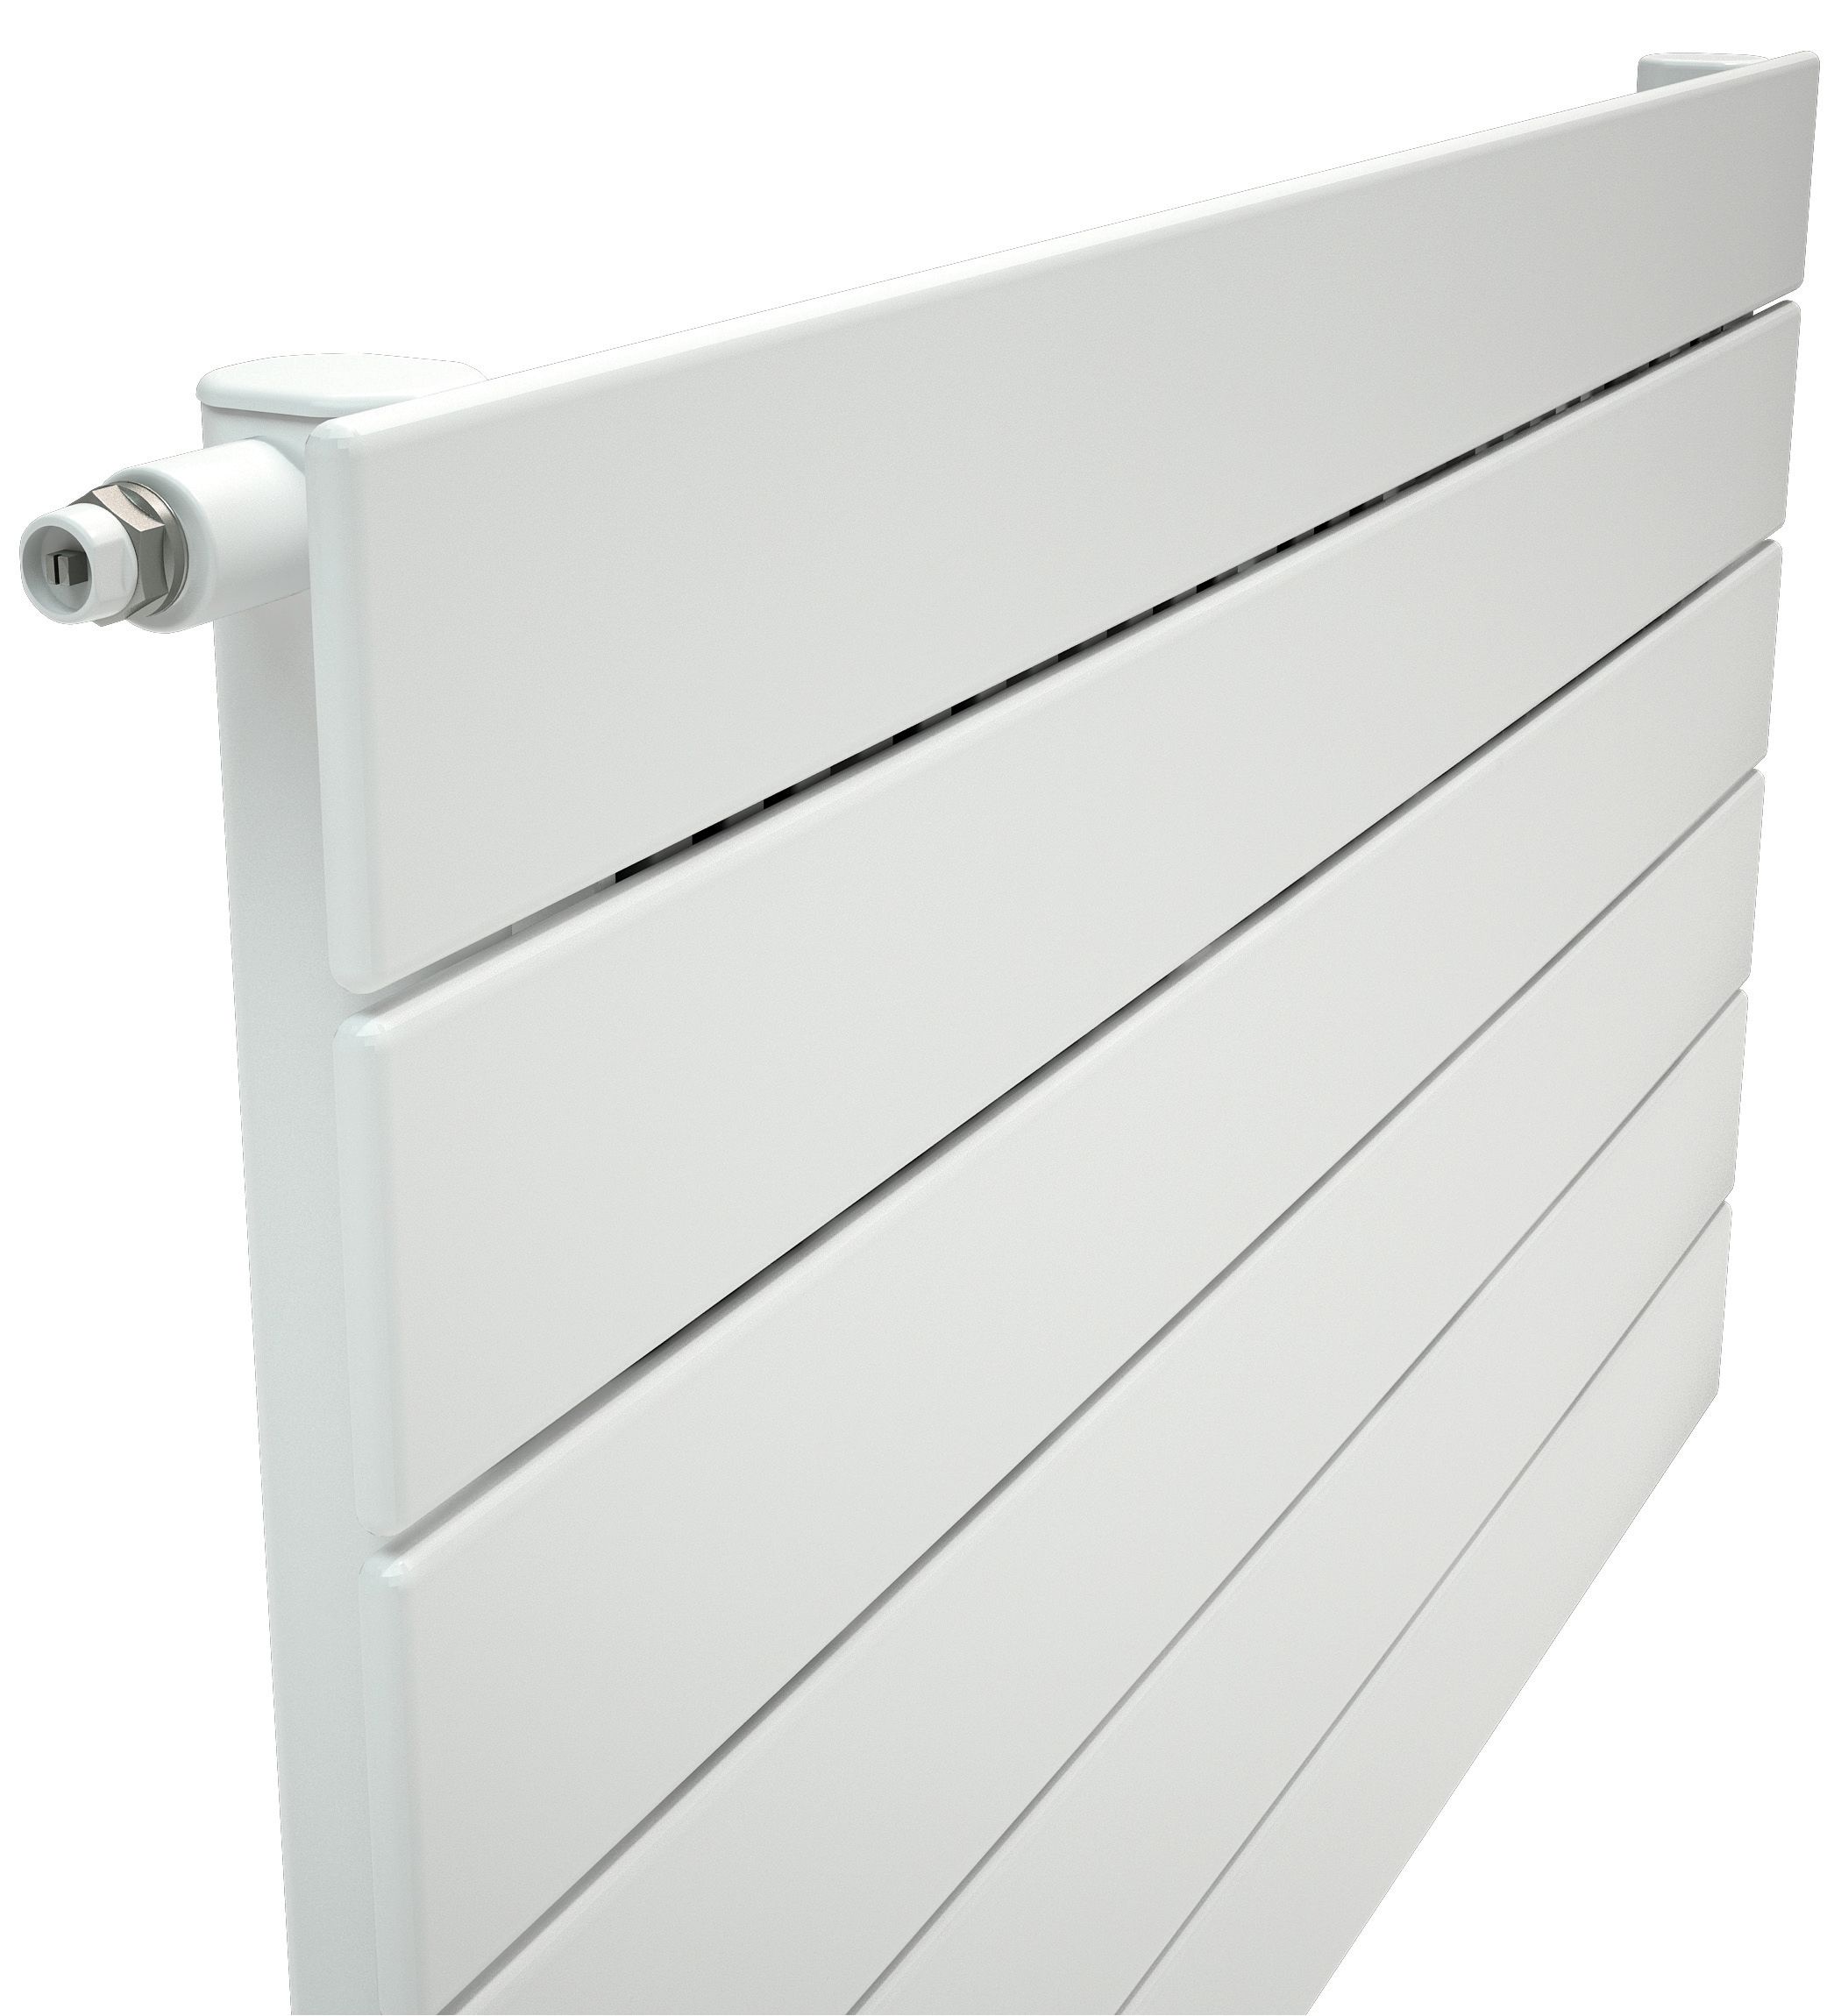 Image of Henrad Verona Single Panel Designer Radiator - White 592 x 800 mm